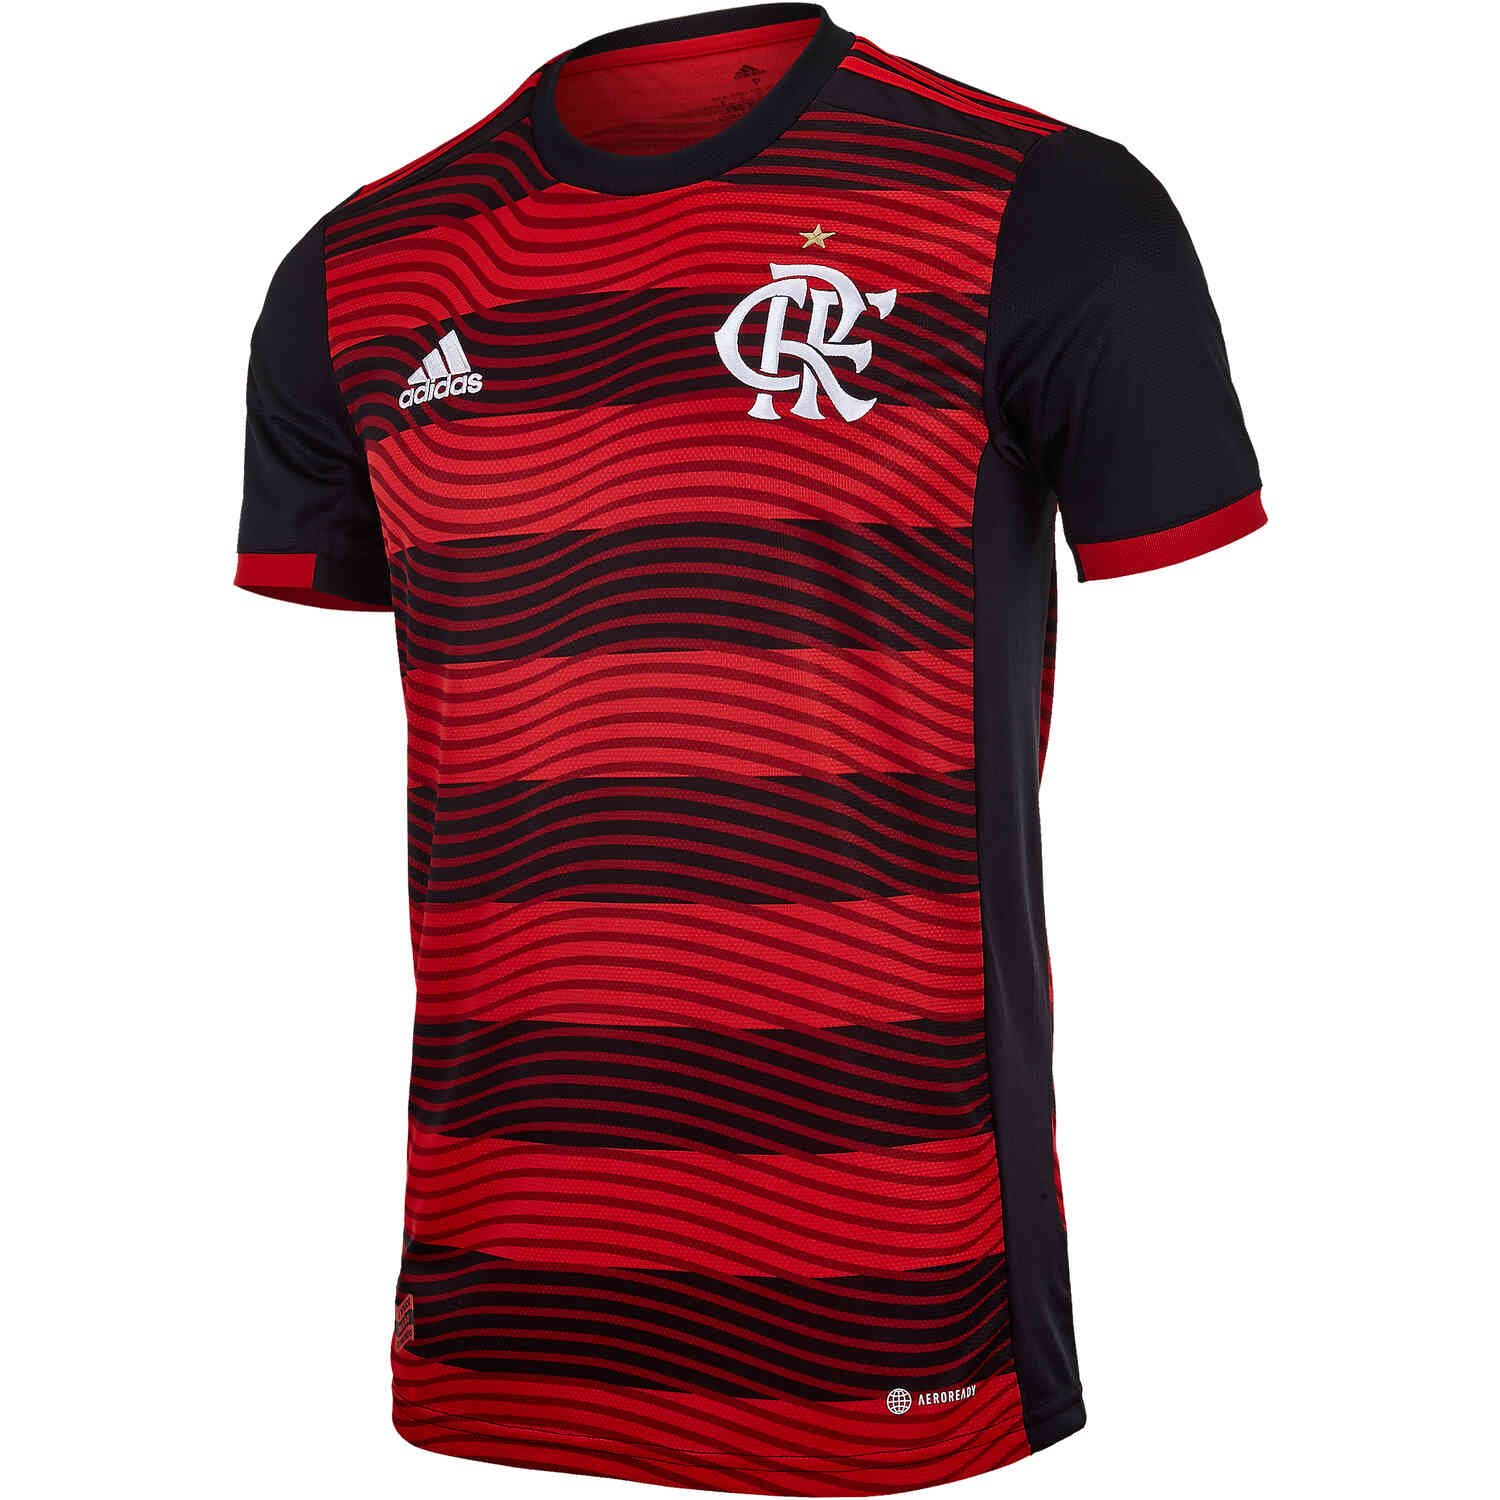 Adidas 2022-23 Belgium Authentic Home Jersey - Red-Black, M